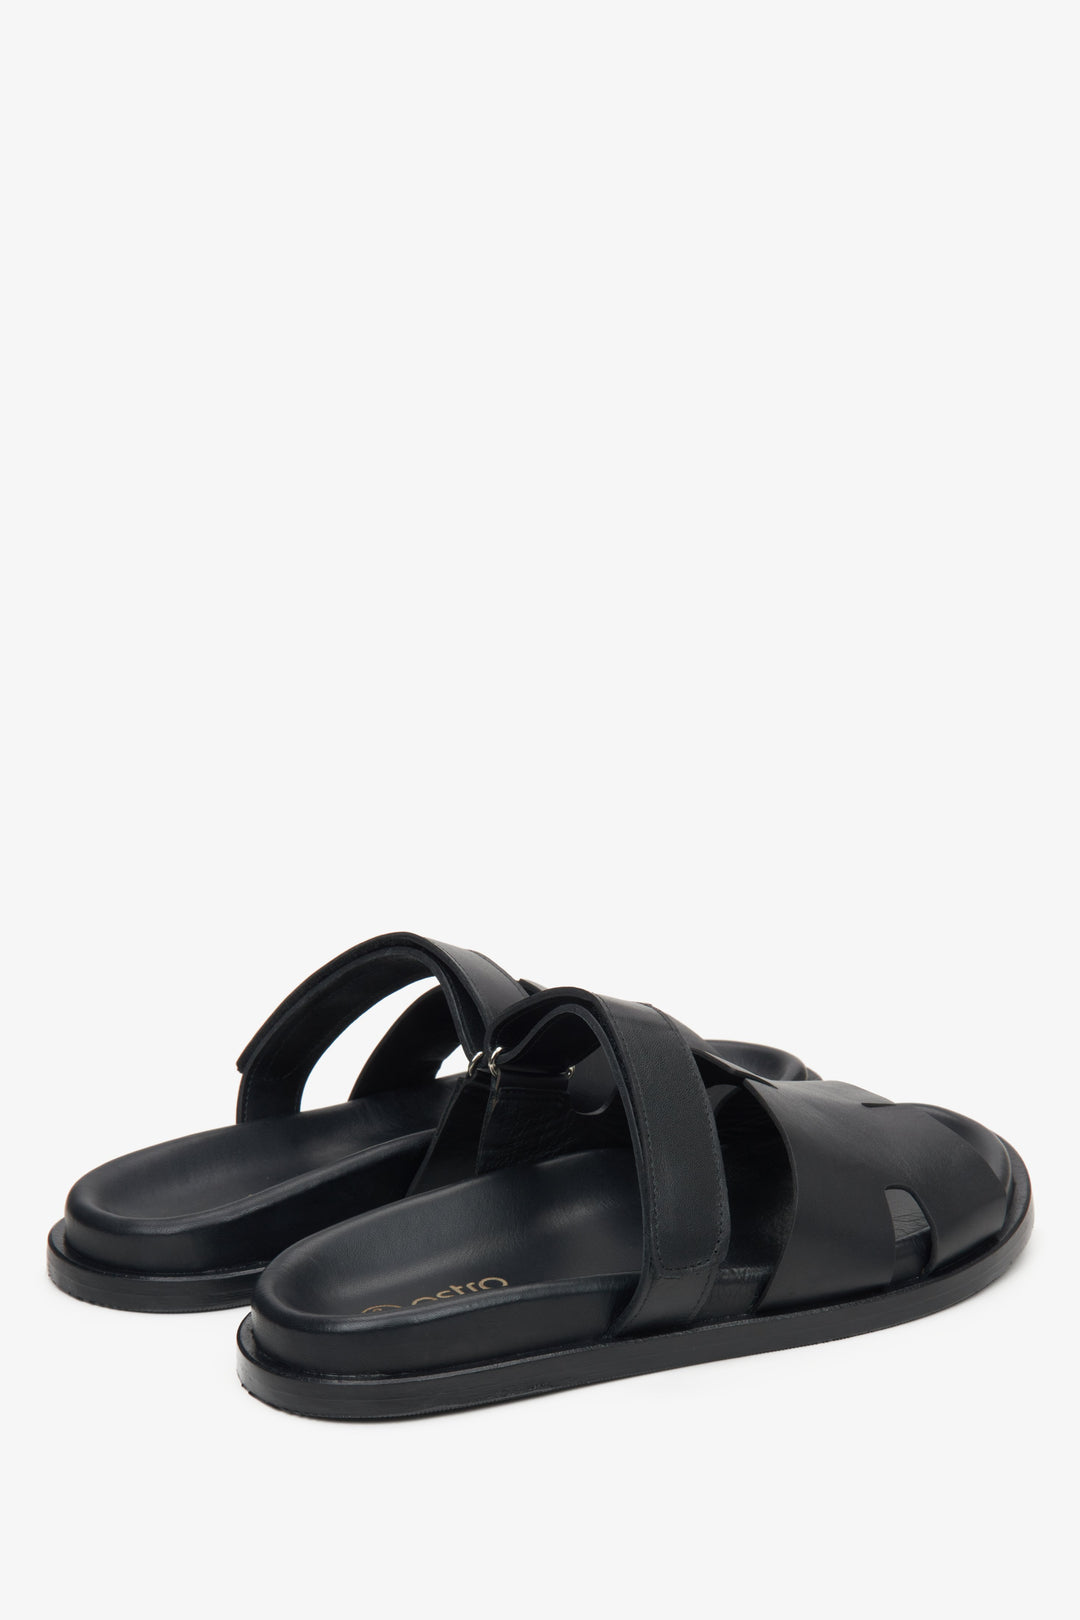 Women's black leather slide sandals Estro.